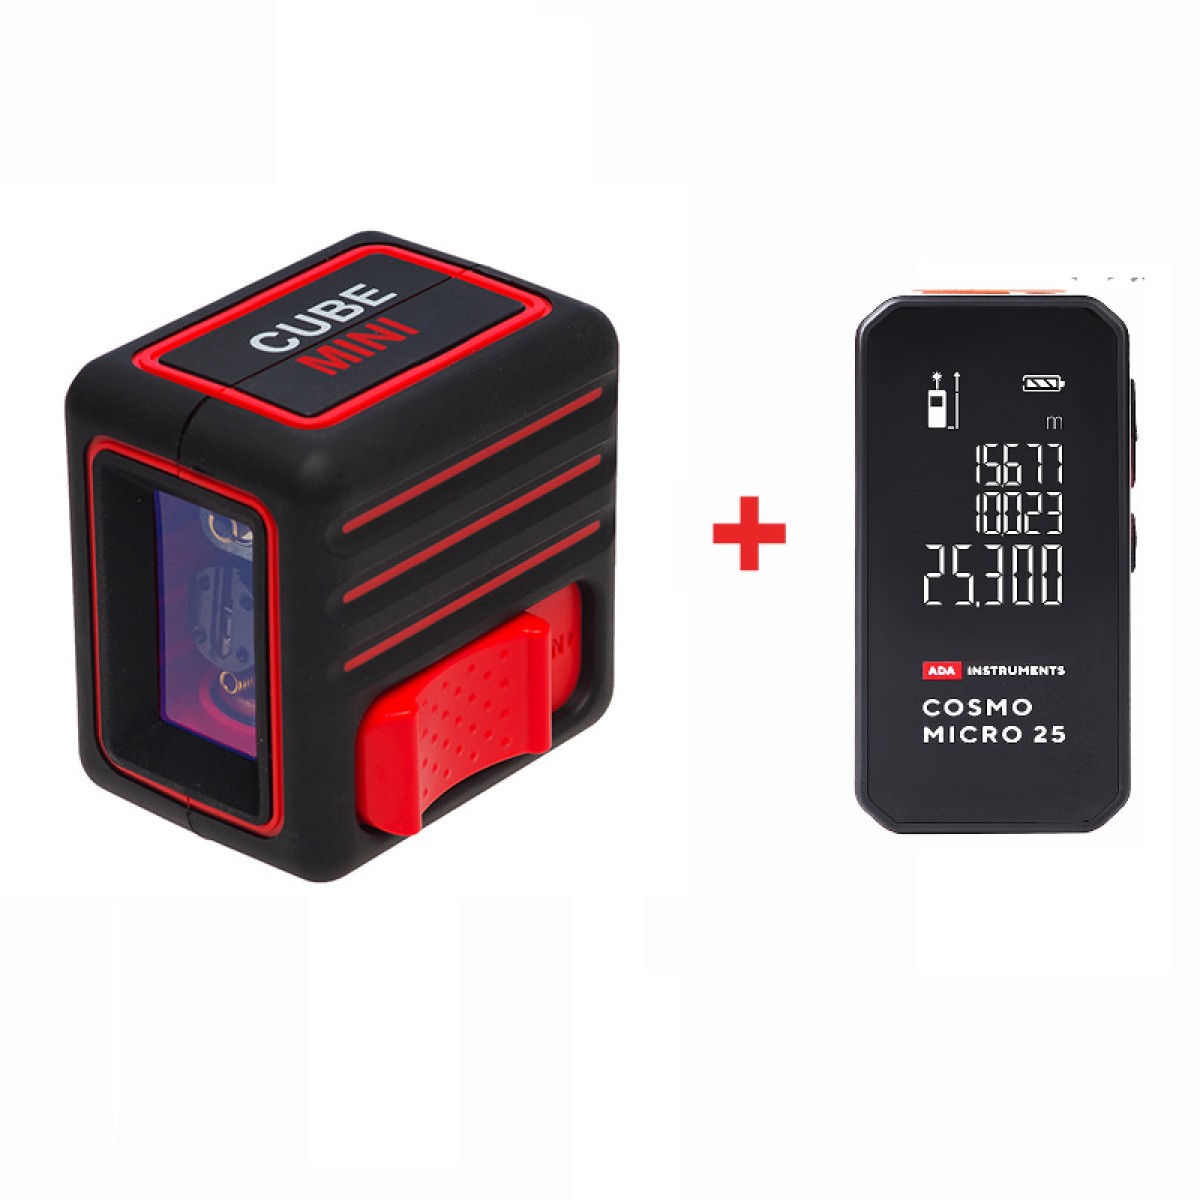 Cube mini basic. Ada Cube Mini Basic + Cosmo Micro. Лазерный нивелир ada Cube Basic Edition. Лазерный уровень Cube Mini. Комплект ada: уровень Cube Mini Basic Edition + дальномер Cosmo Micro 25 а00690.